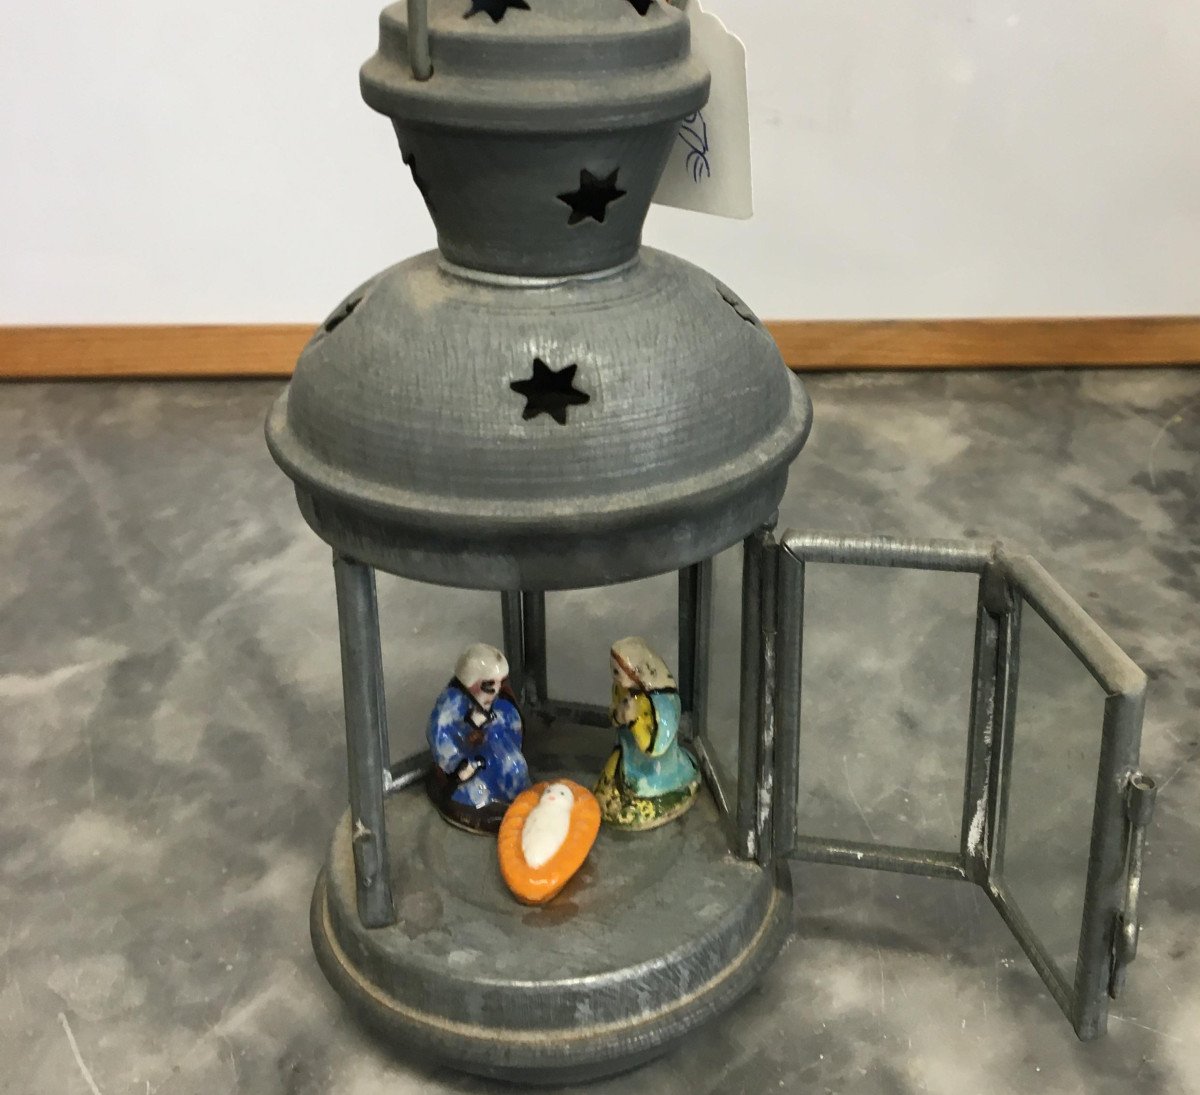 Lantern With A Nativity Scene Inside